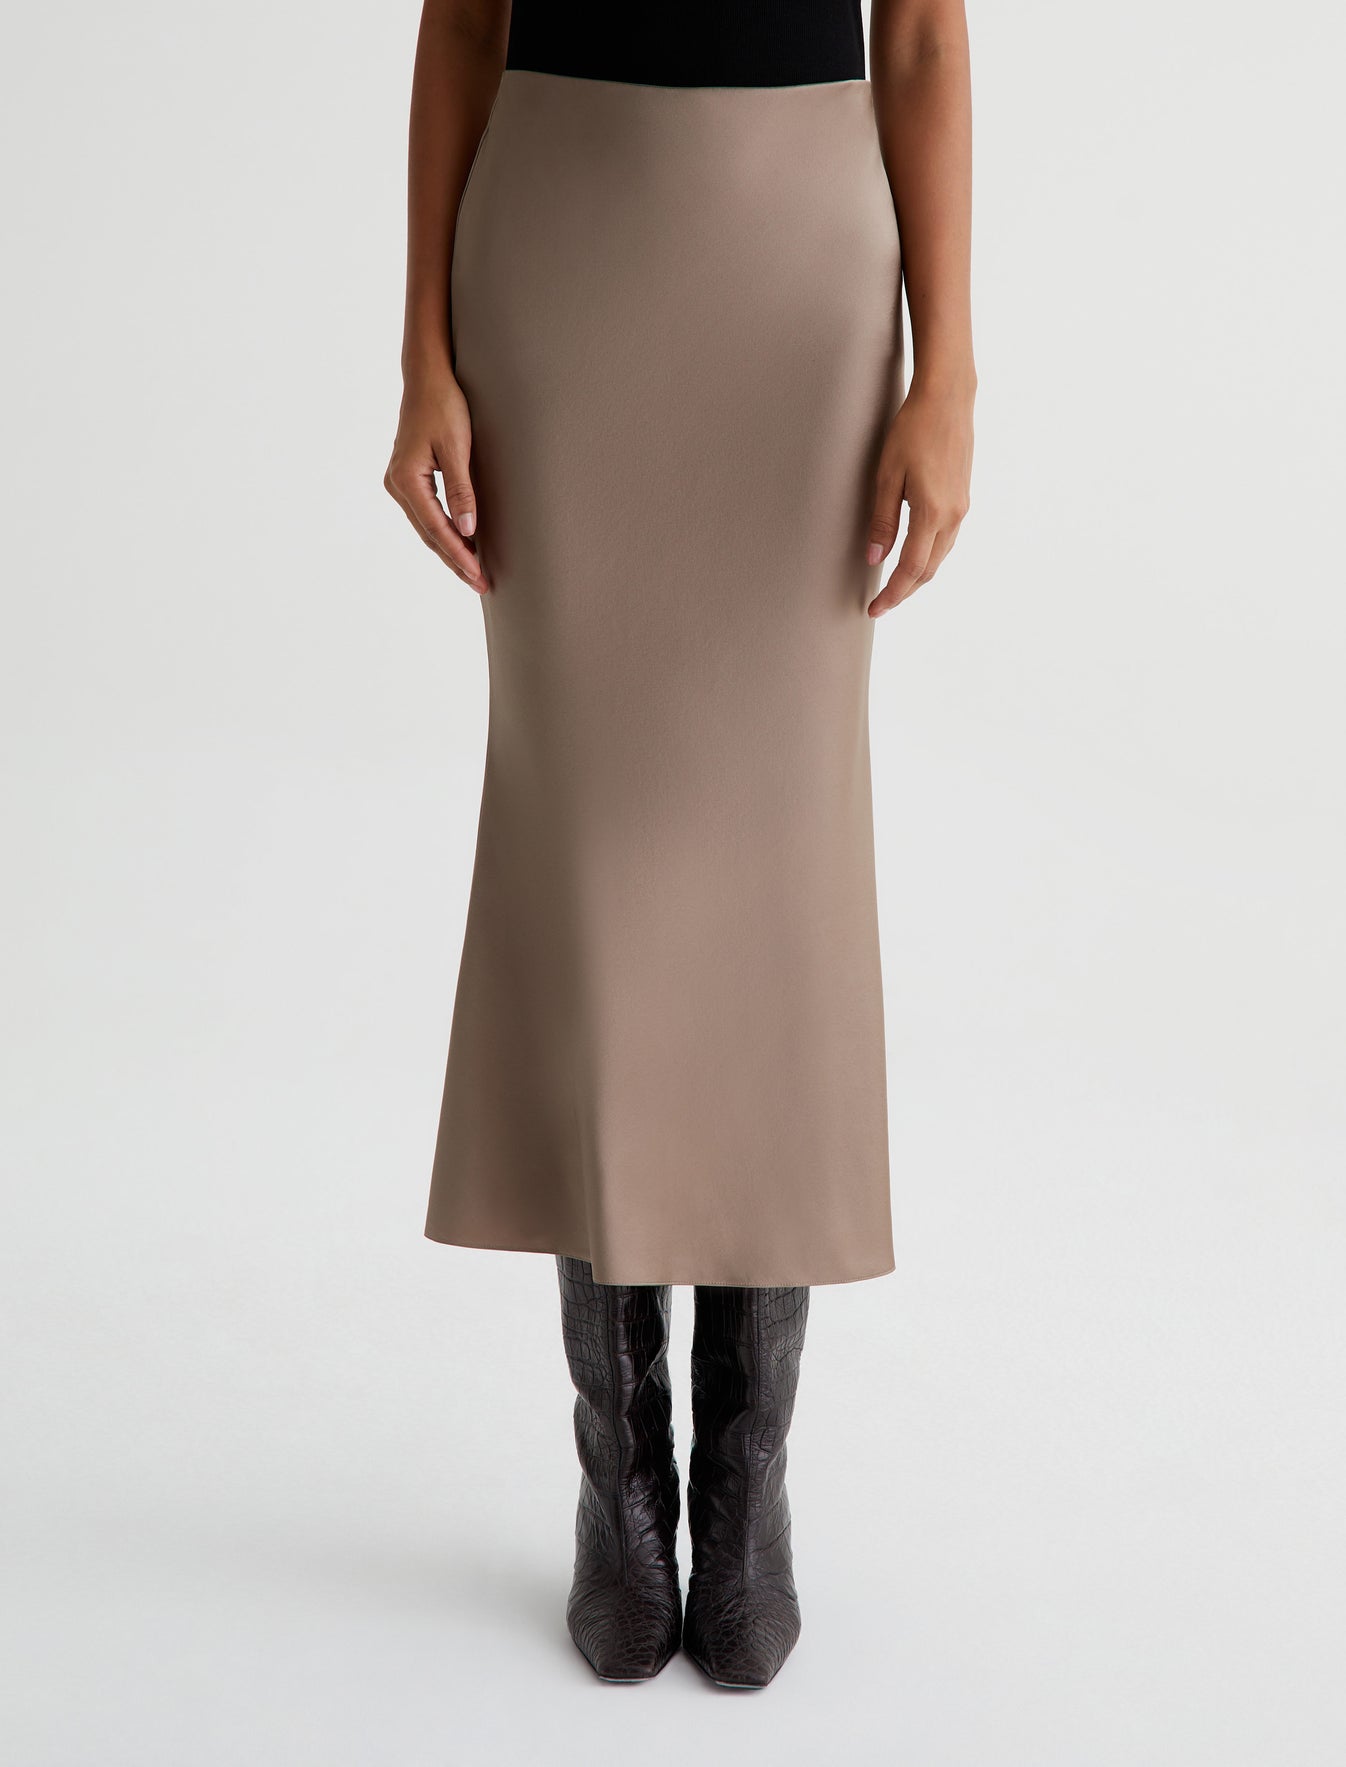 Karina Skirt|Luxe Silk Classic Skirt